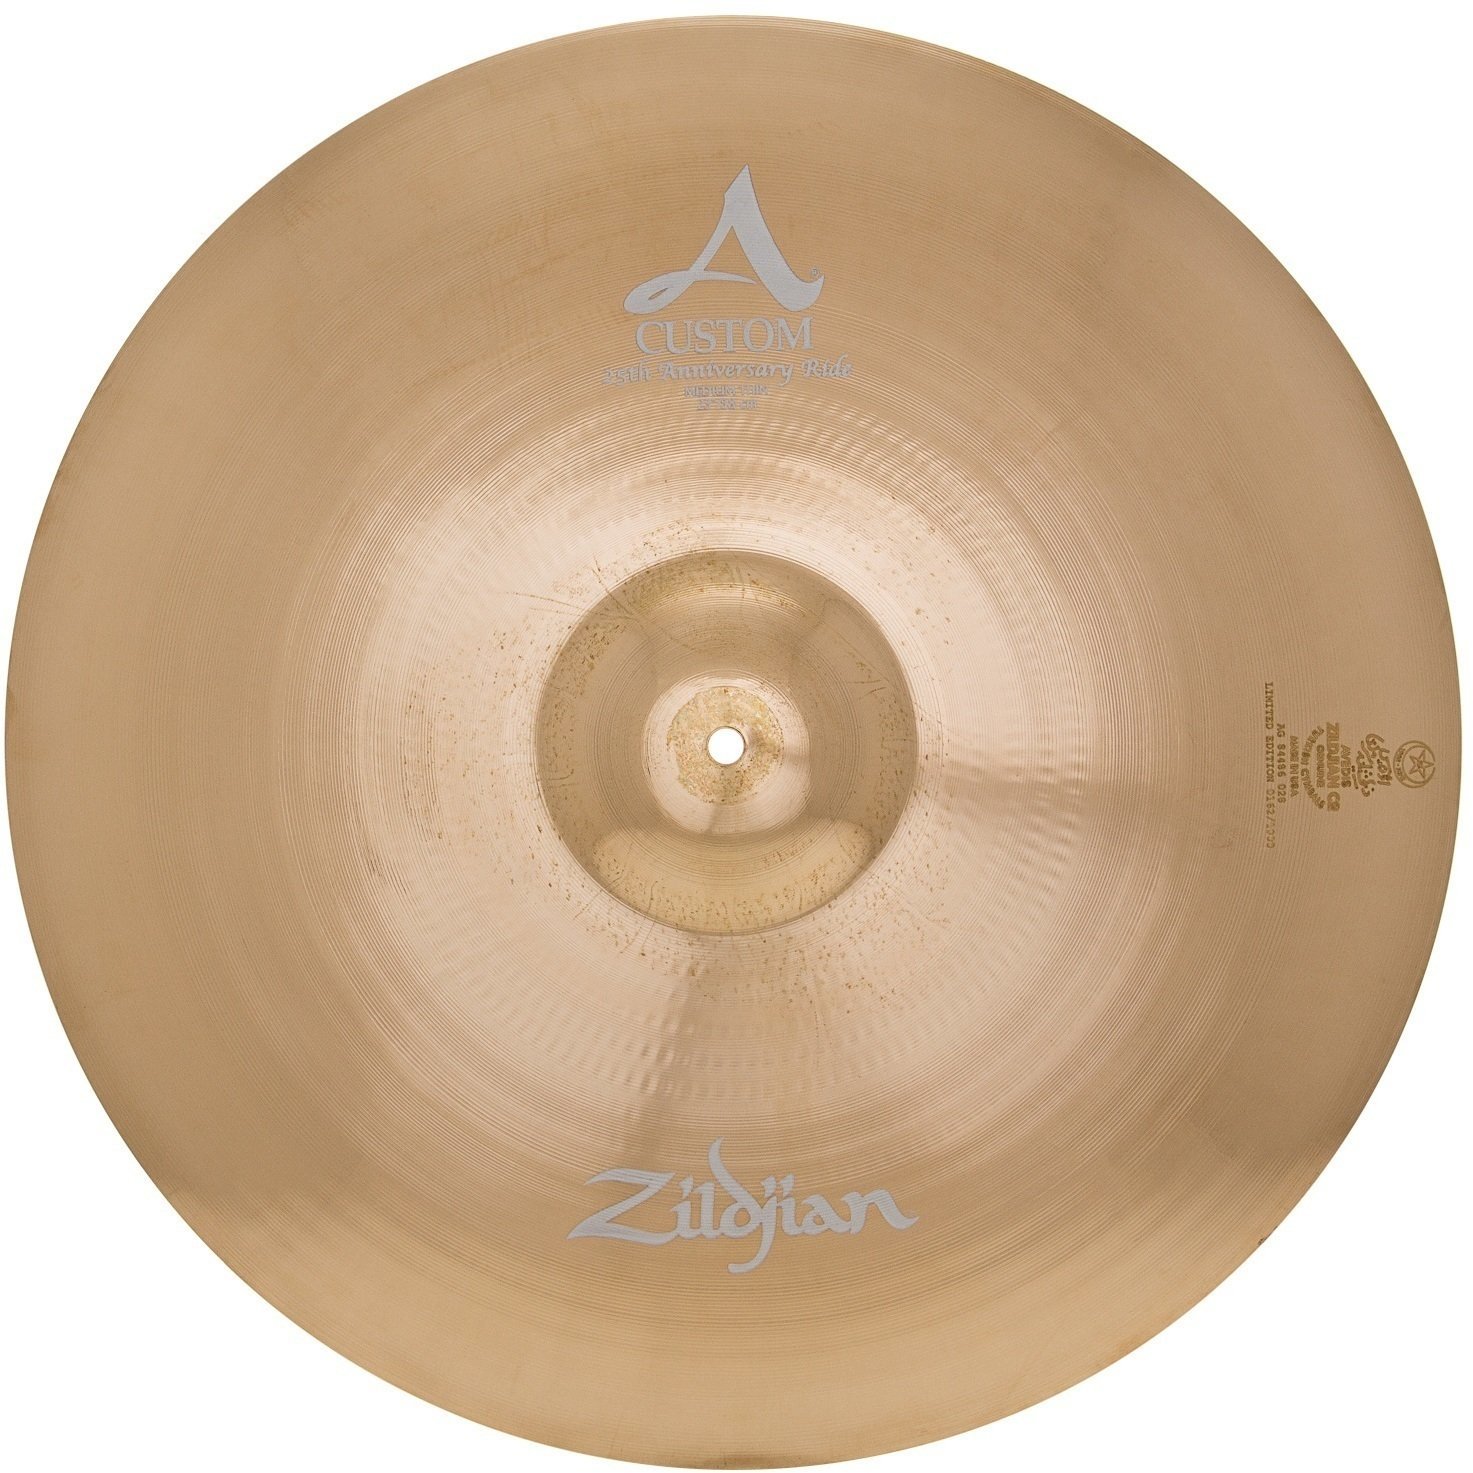 Ride Cymbal Zildjian ACP25 A Custom 25th Anniversary Limited Edition Ride Cymbal 23"